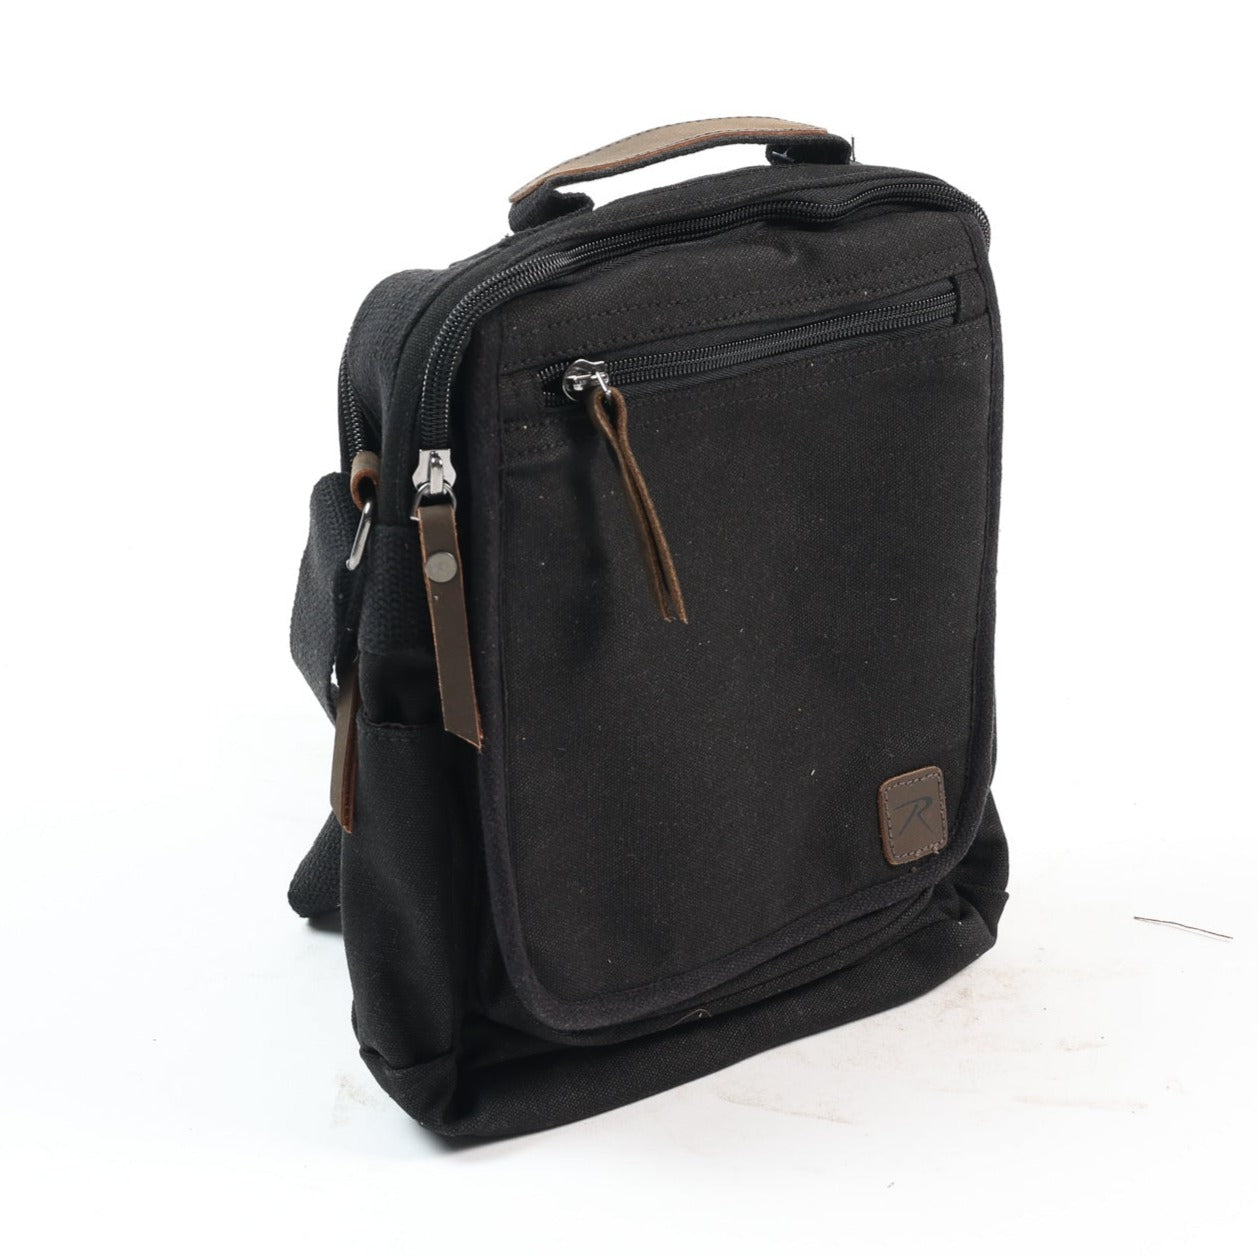 Leather & Canvas Messenger Bag in Black